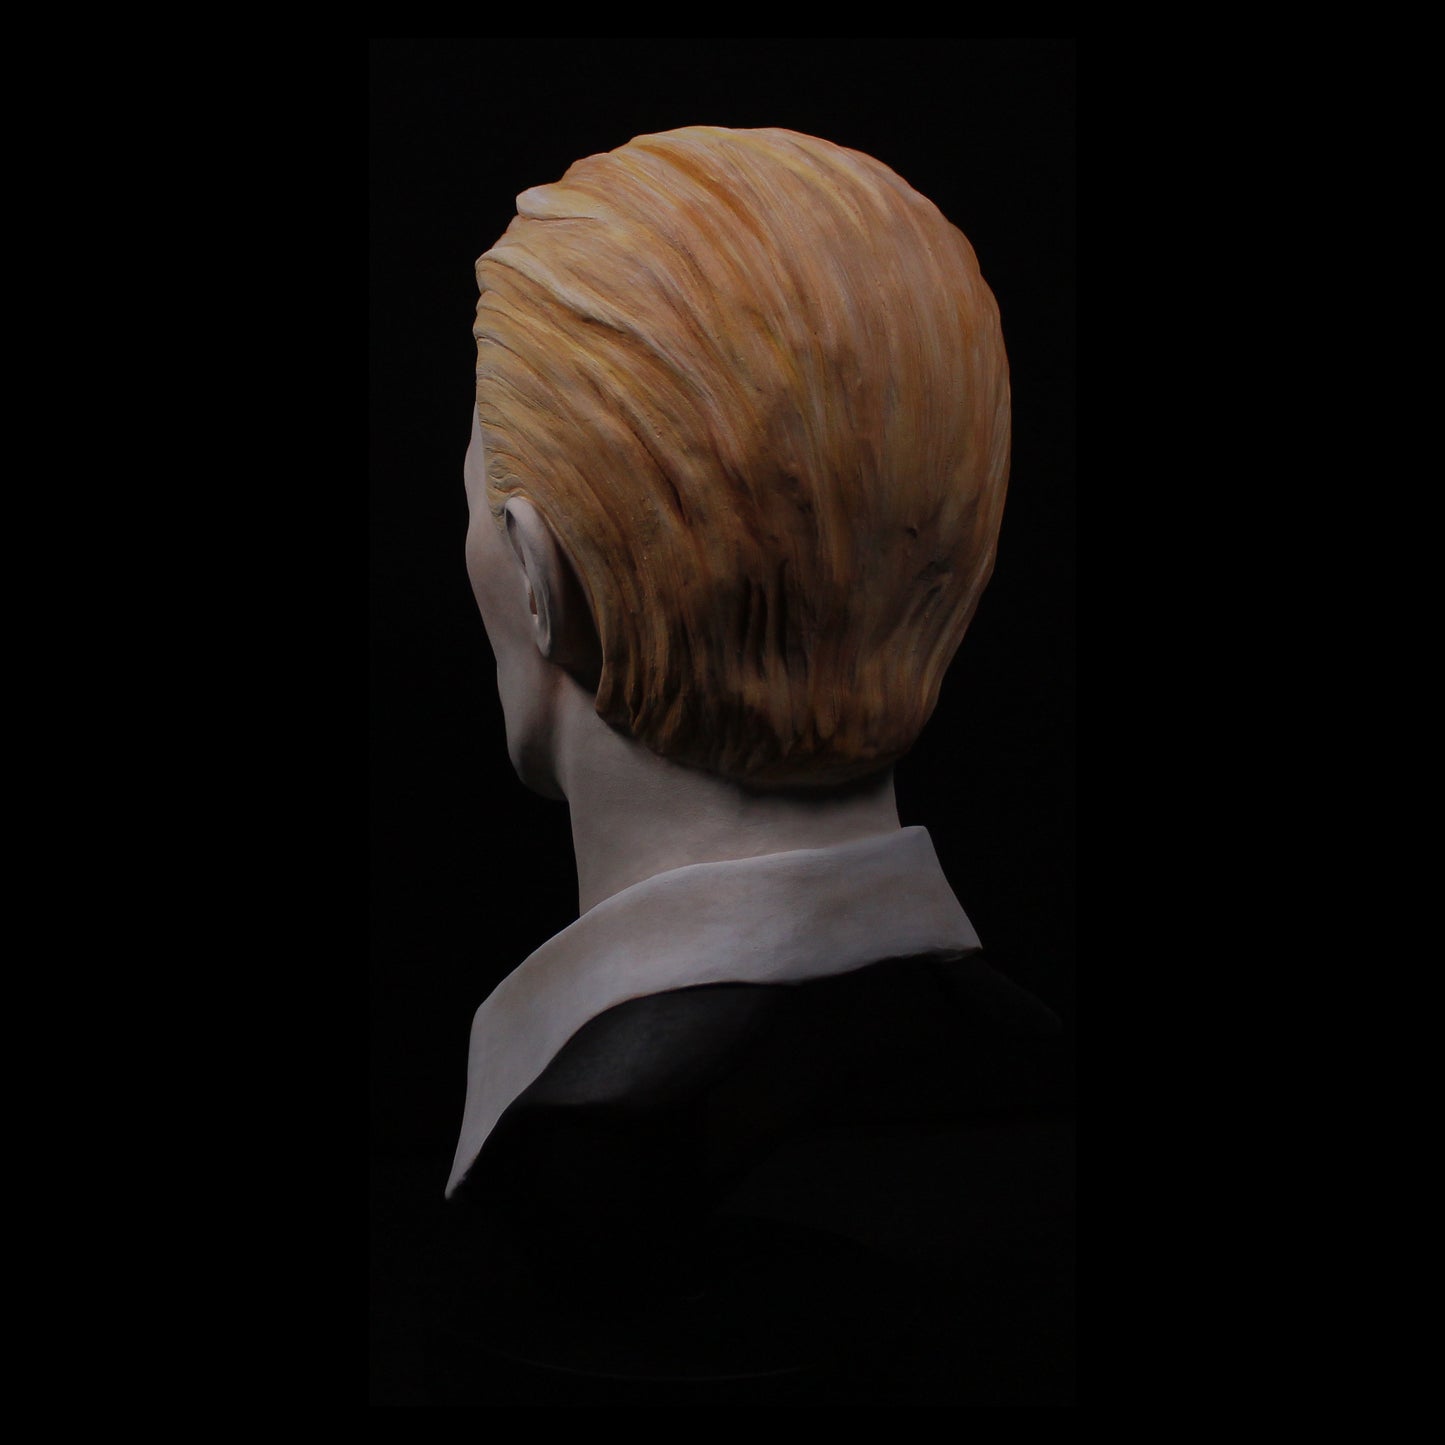 David Bowie - Ceramic Portrait Bust Sculpture - 'The Thin White Duke' - Full Head